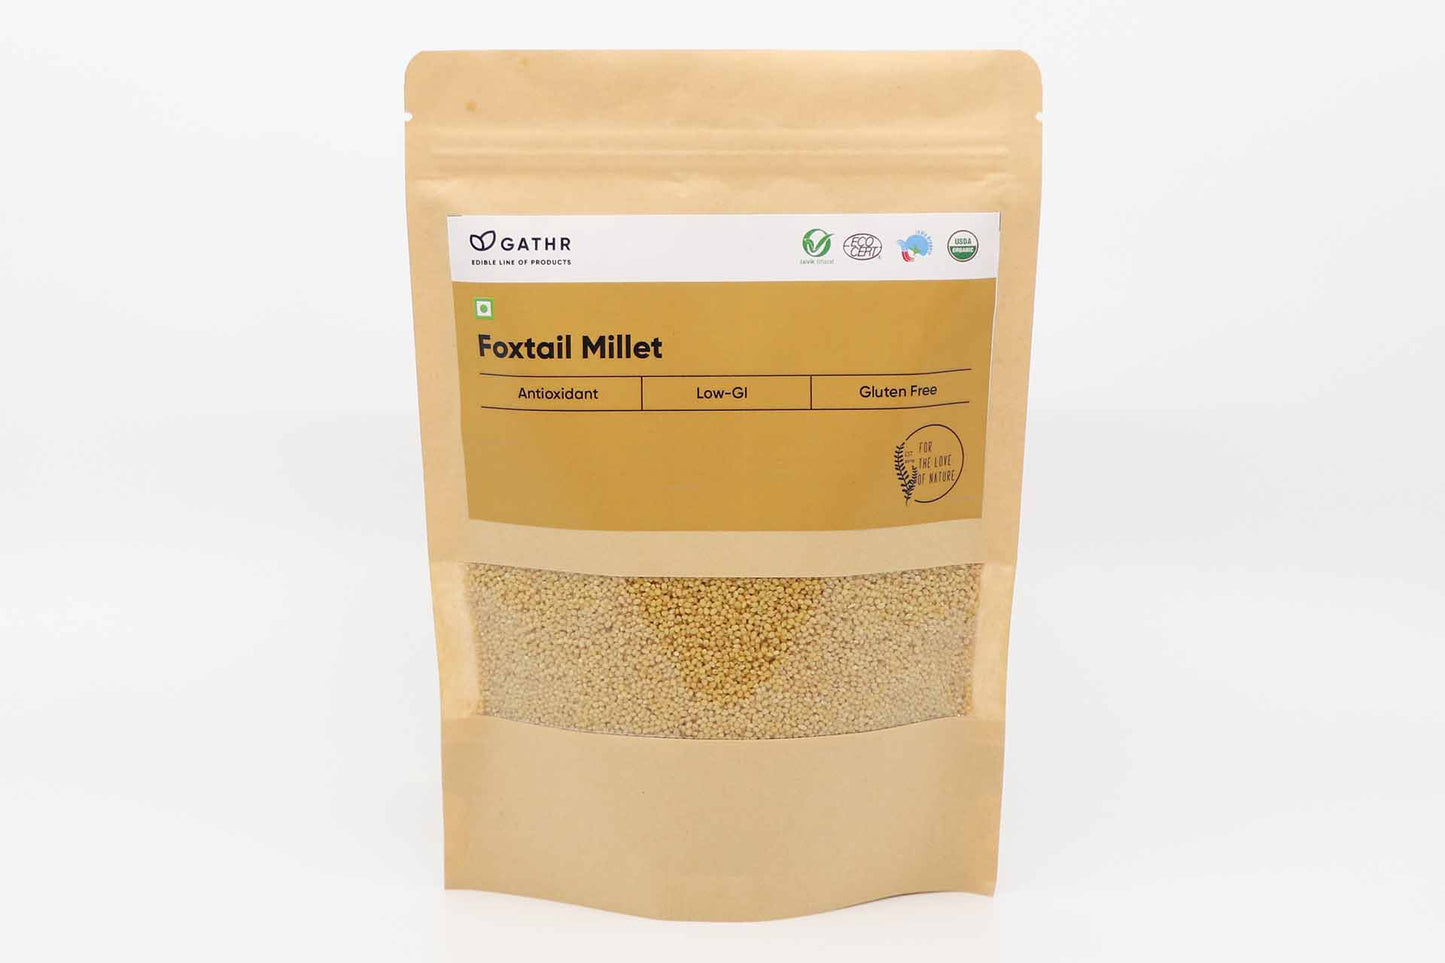 Foxtail Millet 500 gm